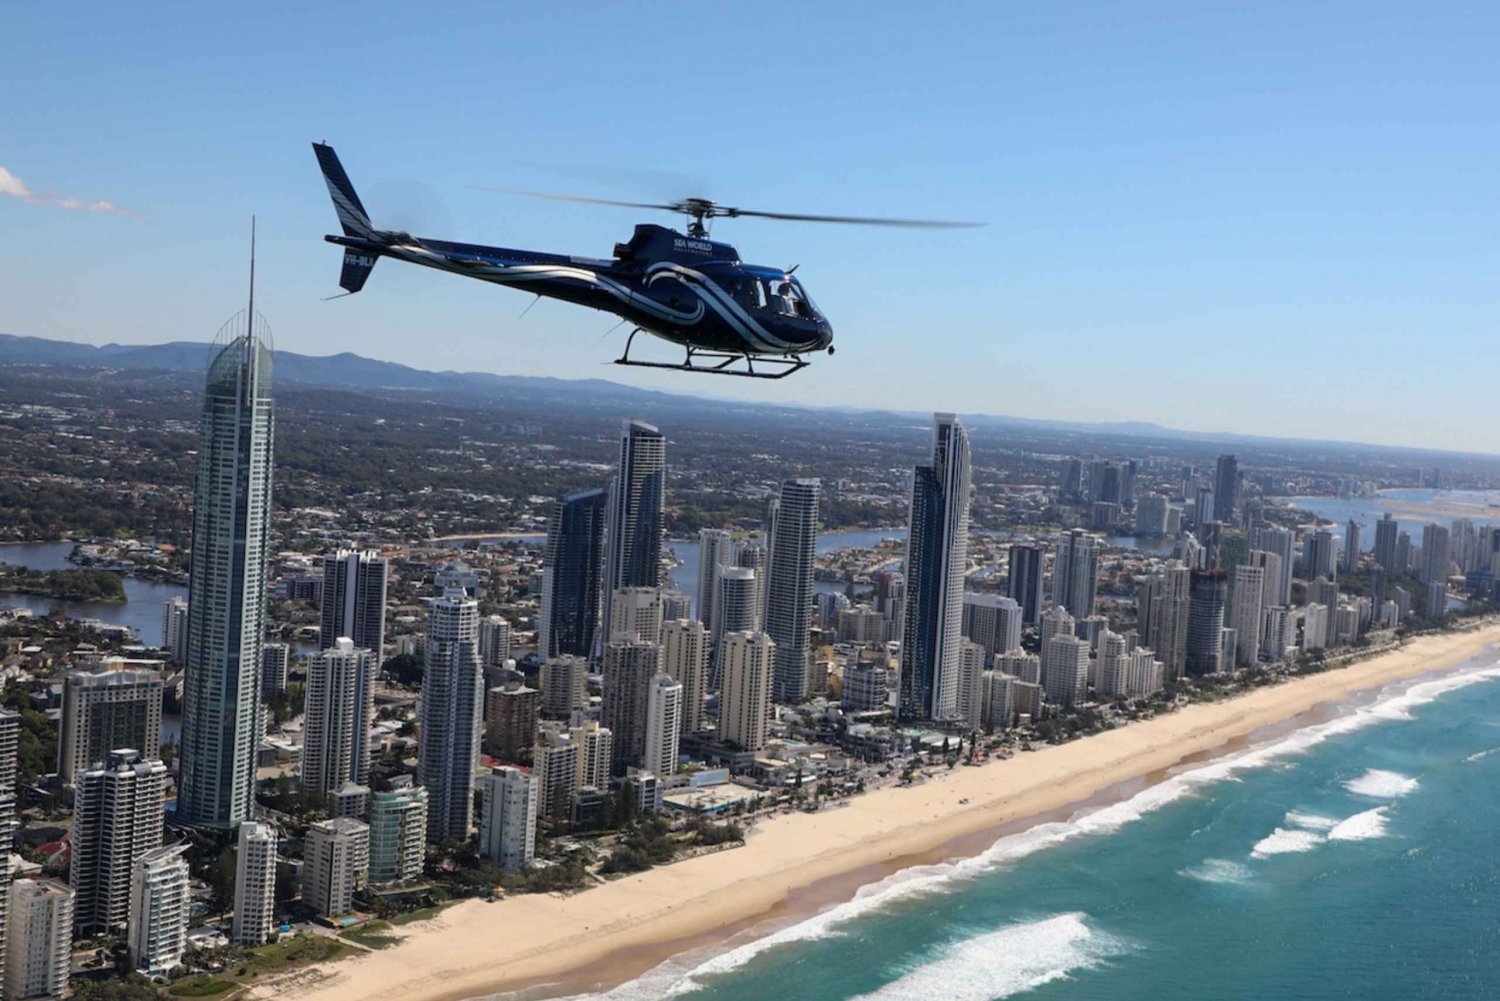 Gold Coast: Voo panorâmico de helicóptero pela cidade costeira